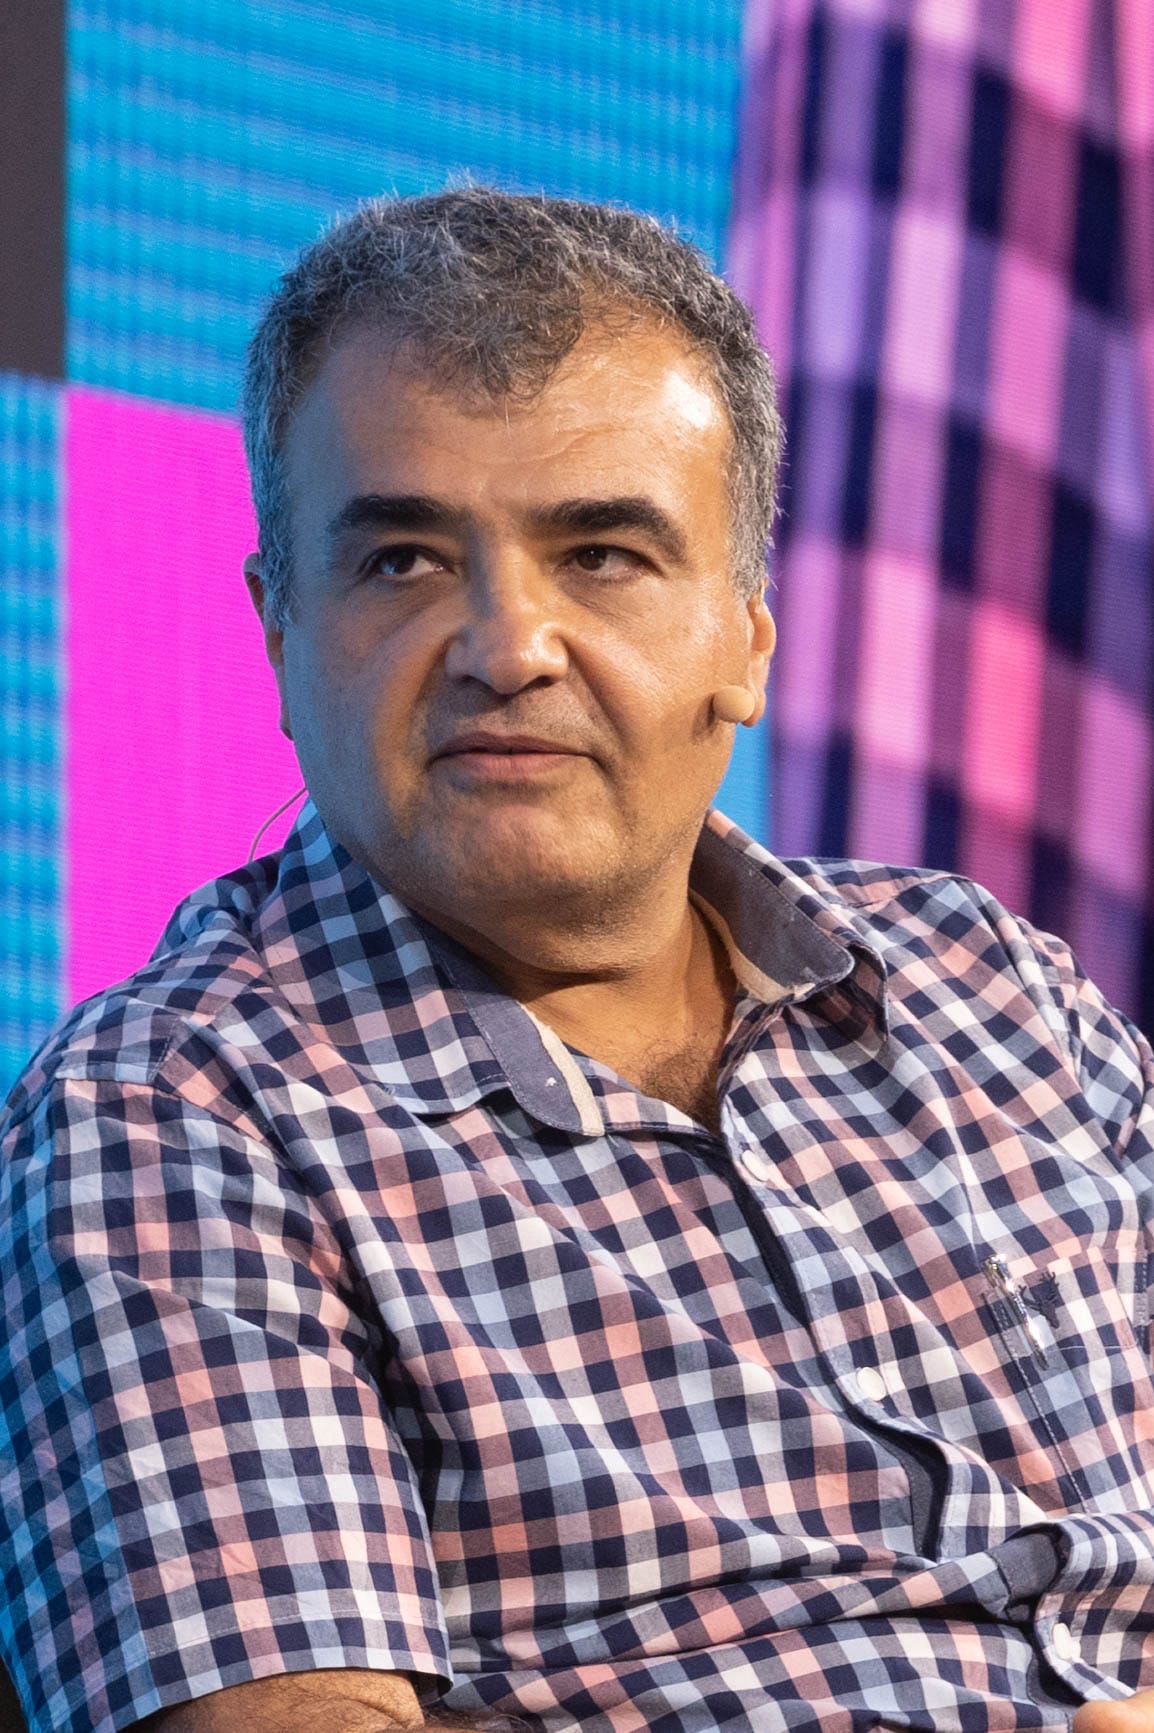 Professor Navid Moheimani